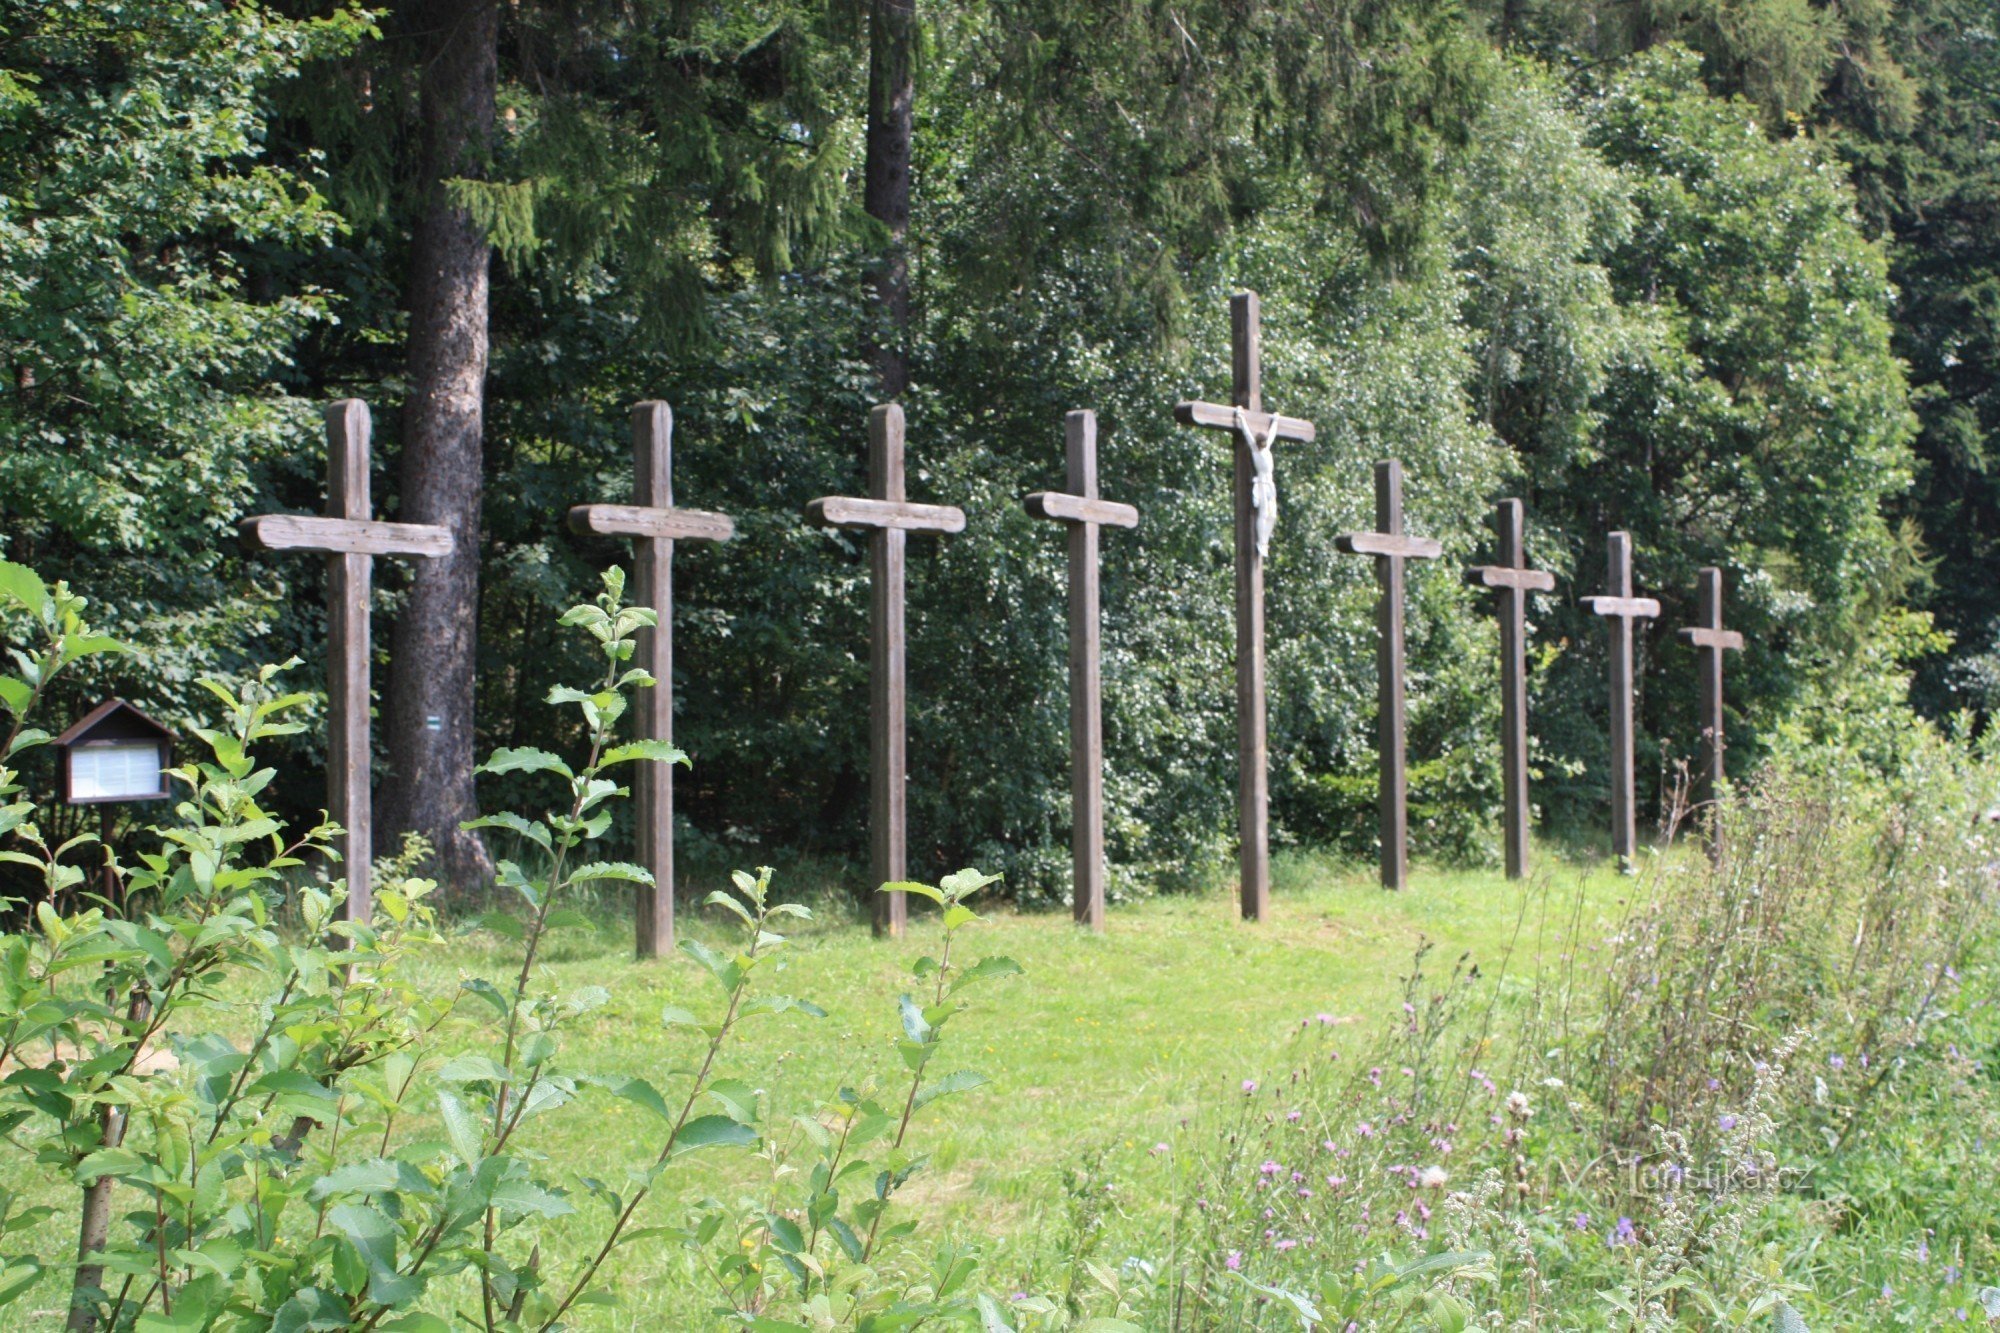 Neuf croix - monument